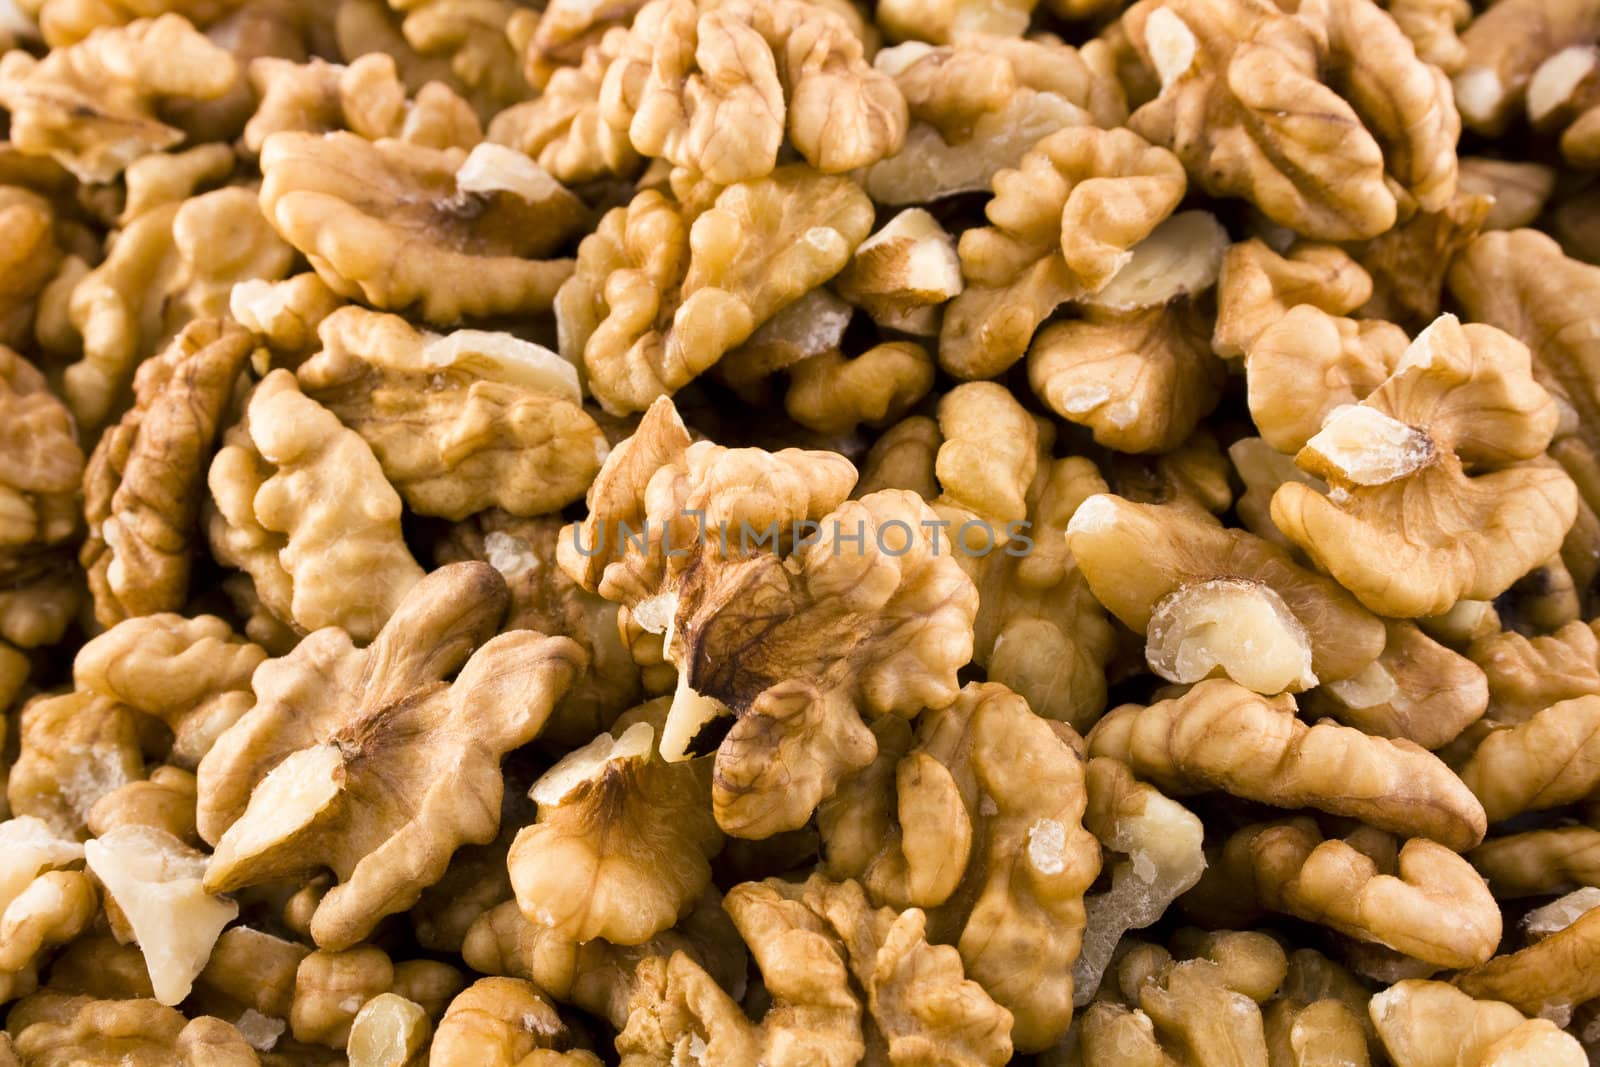 Close up image of walnuts